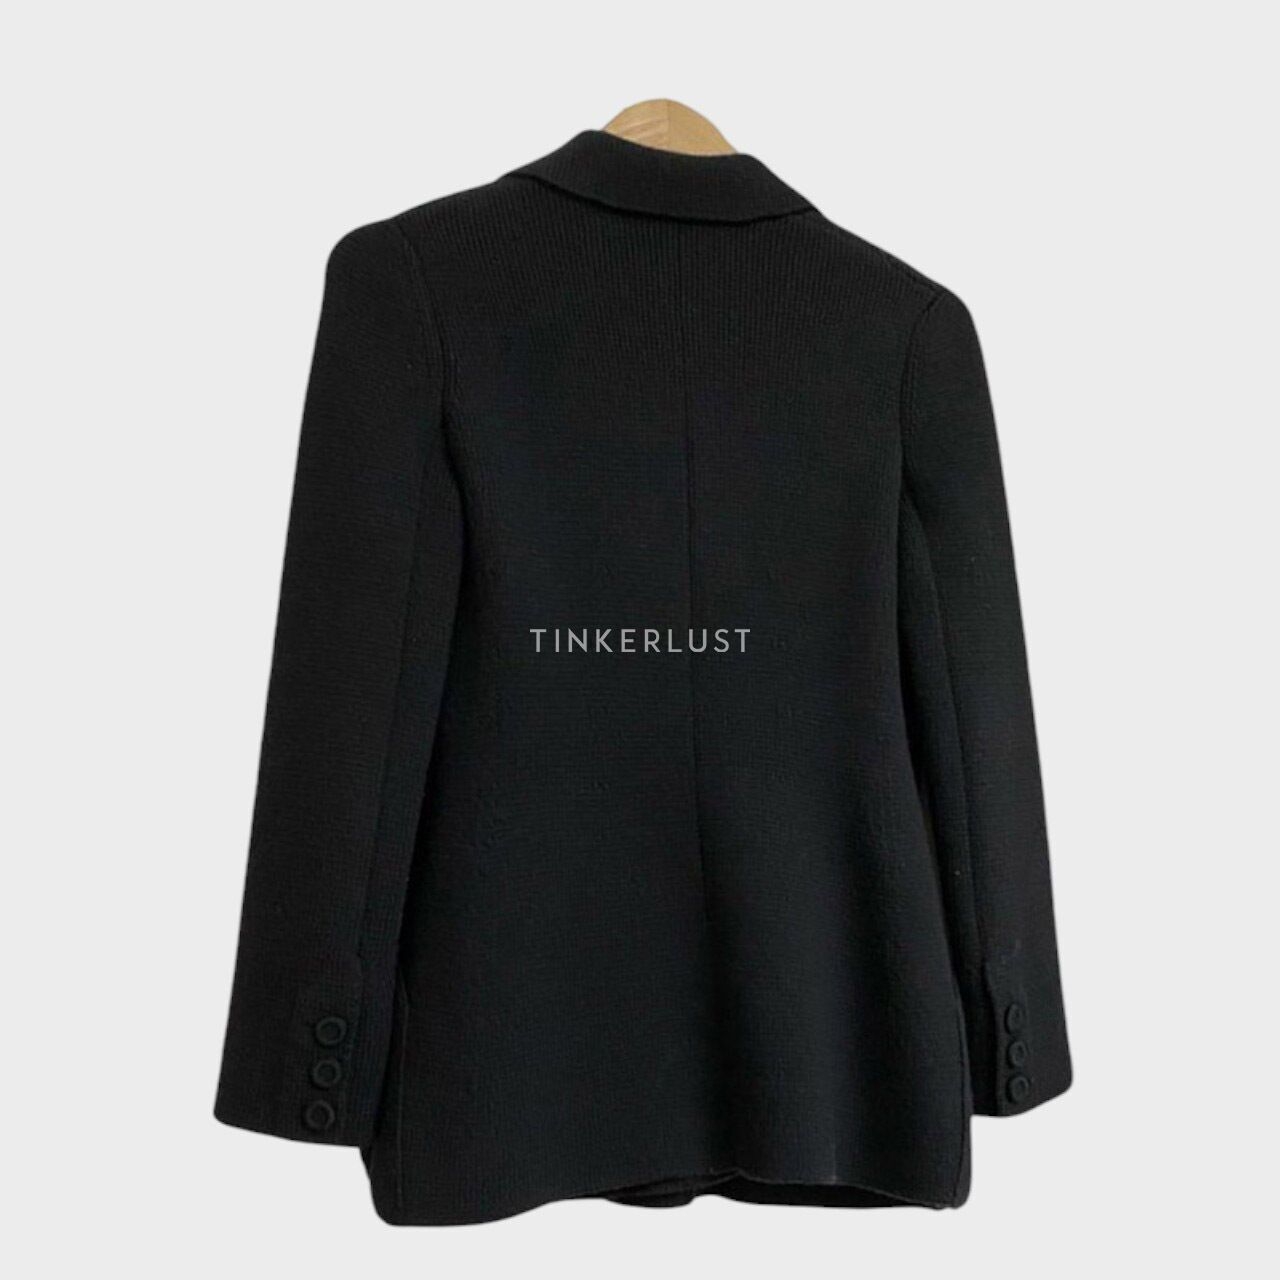 Christian Dior XS Knitted Bar Black Jacket